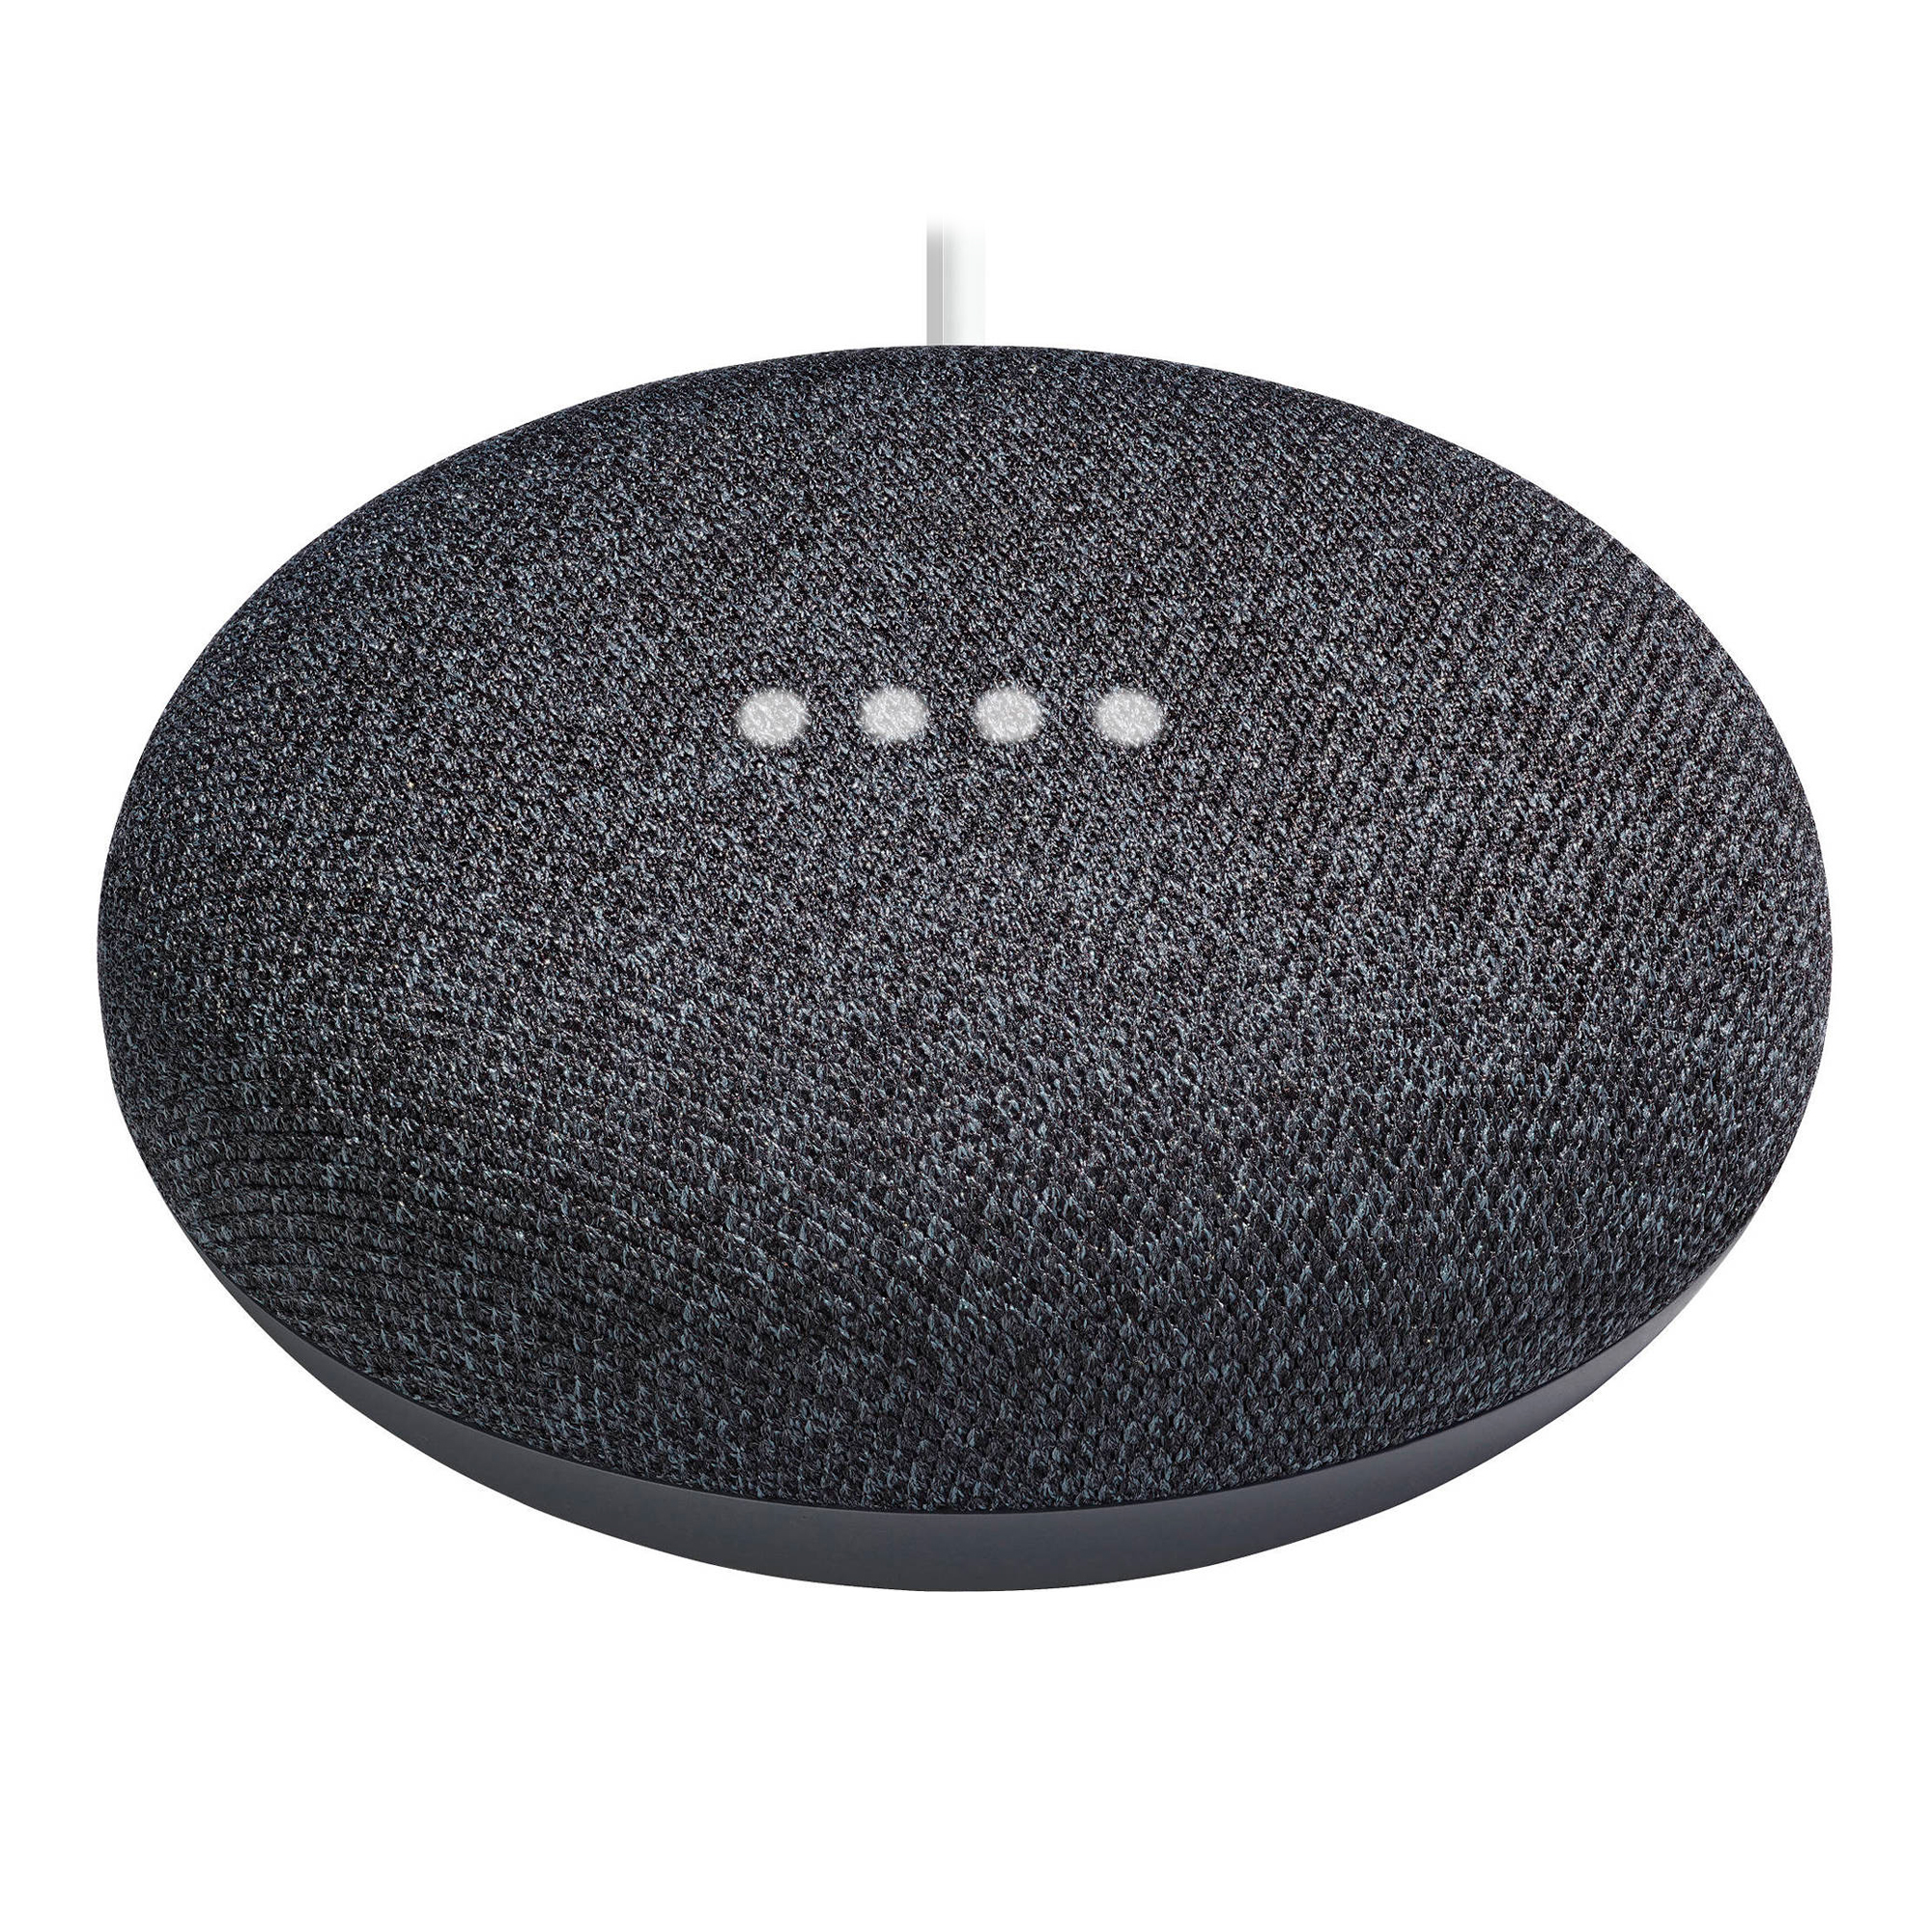 Smart Assistant Google Nest Mini 2gen Charcoal